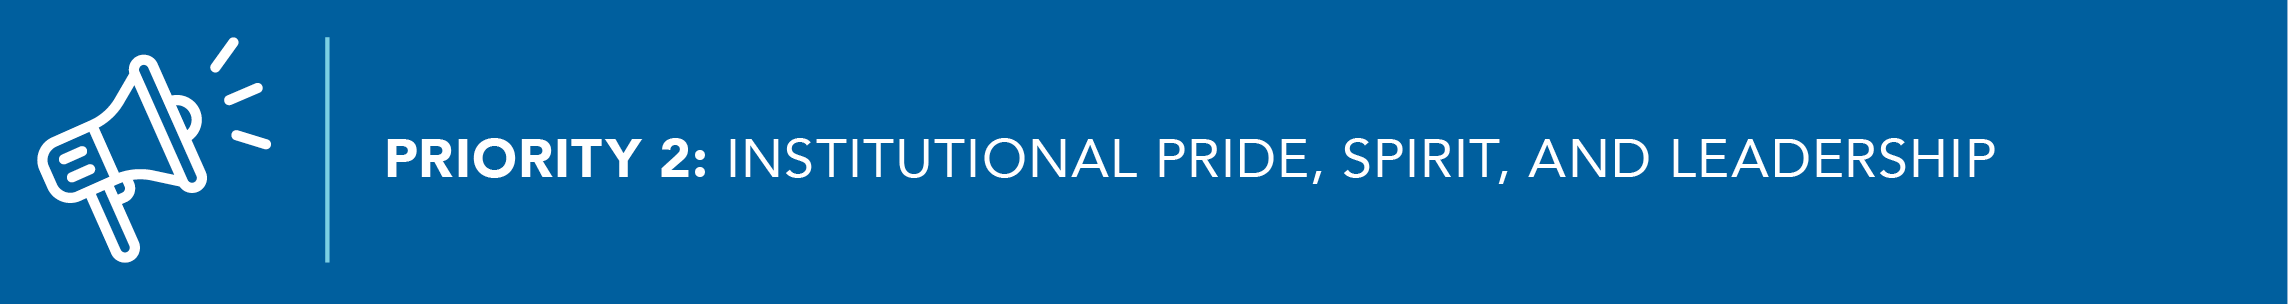 Priority 2: Institutional Pride, Spirit, and Leadership